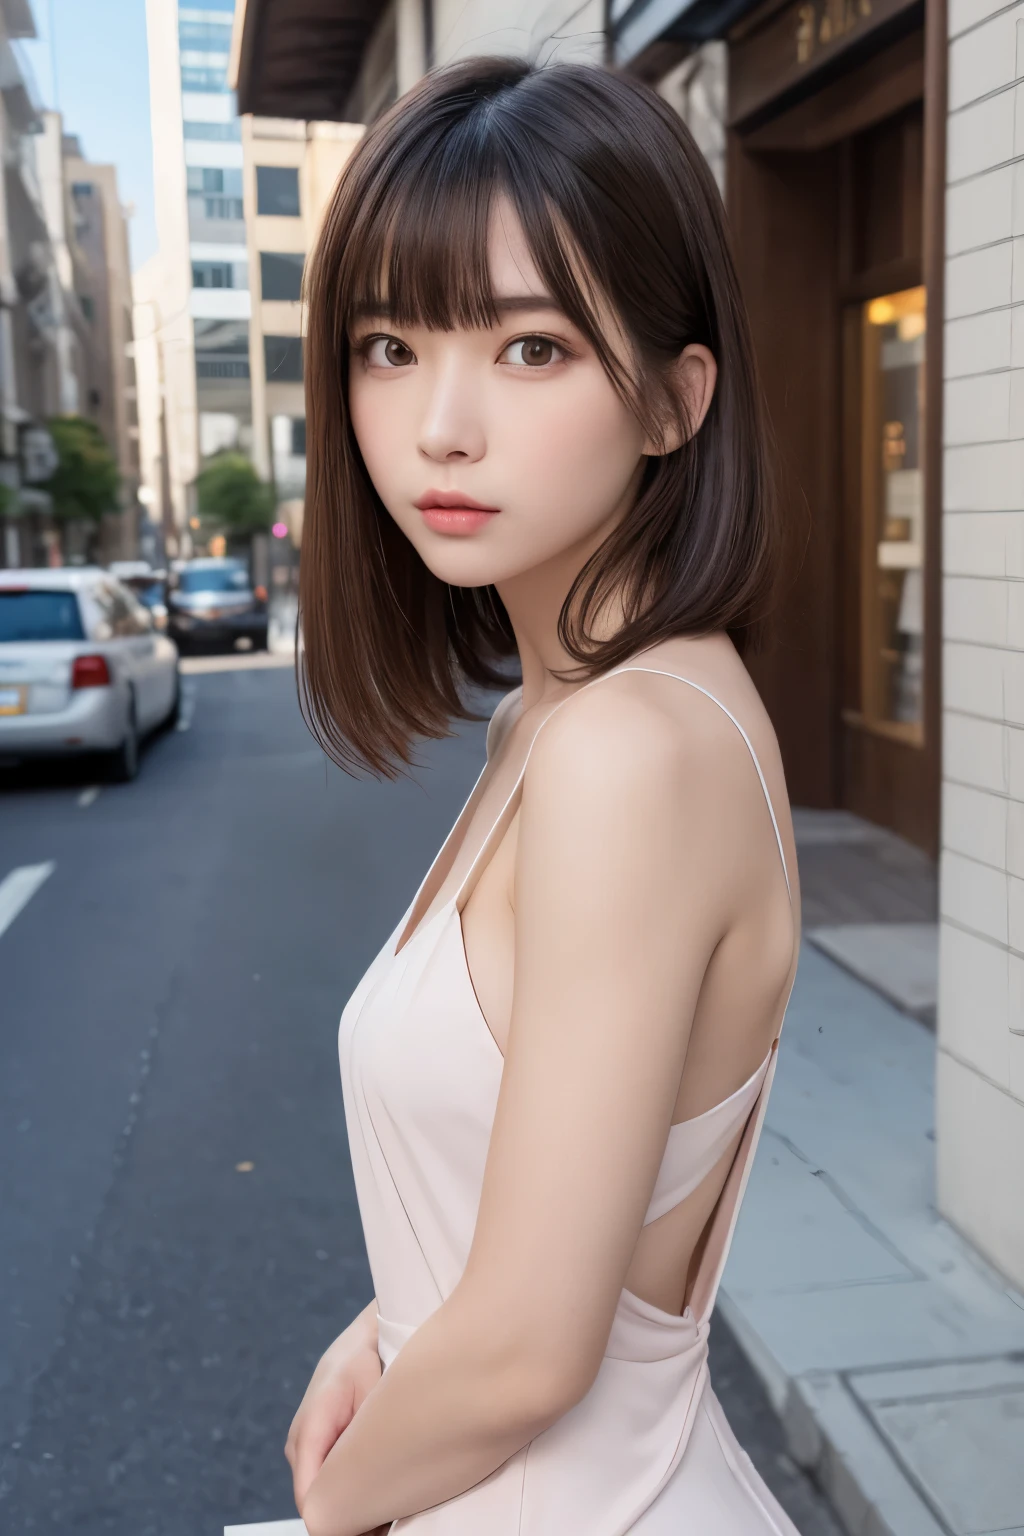 ２０Year old Japanese single girl、(beautiful girl、Slender Girl:1.3)、(15 years old:1.3)、BREAK、nsfw、(side cut dress:1.3)、(show nude、side boob:1.3)、BREAK、Very detailed definition、(symmetrical eyes:1.3)、BREAK、(Street view:1.3)、(shot from the side、Upper body)、BREAK、small breasts、brown eyes、parted bangs、brown hair、girl、BREAK、(eyes and face)with detail:1.0)、BREAK、(master piece、highest quality、Super detailed、detailed face、8K)